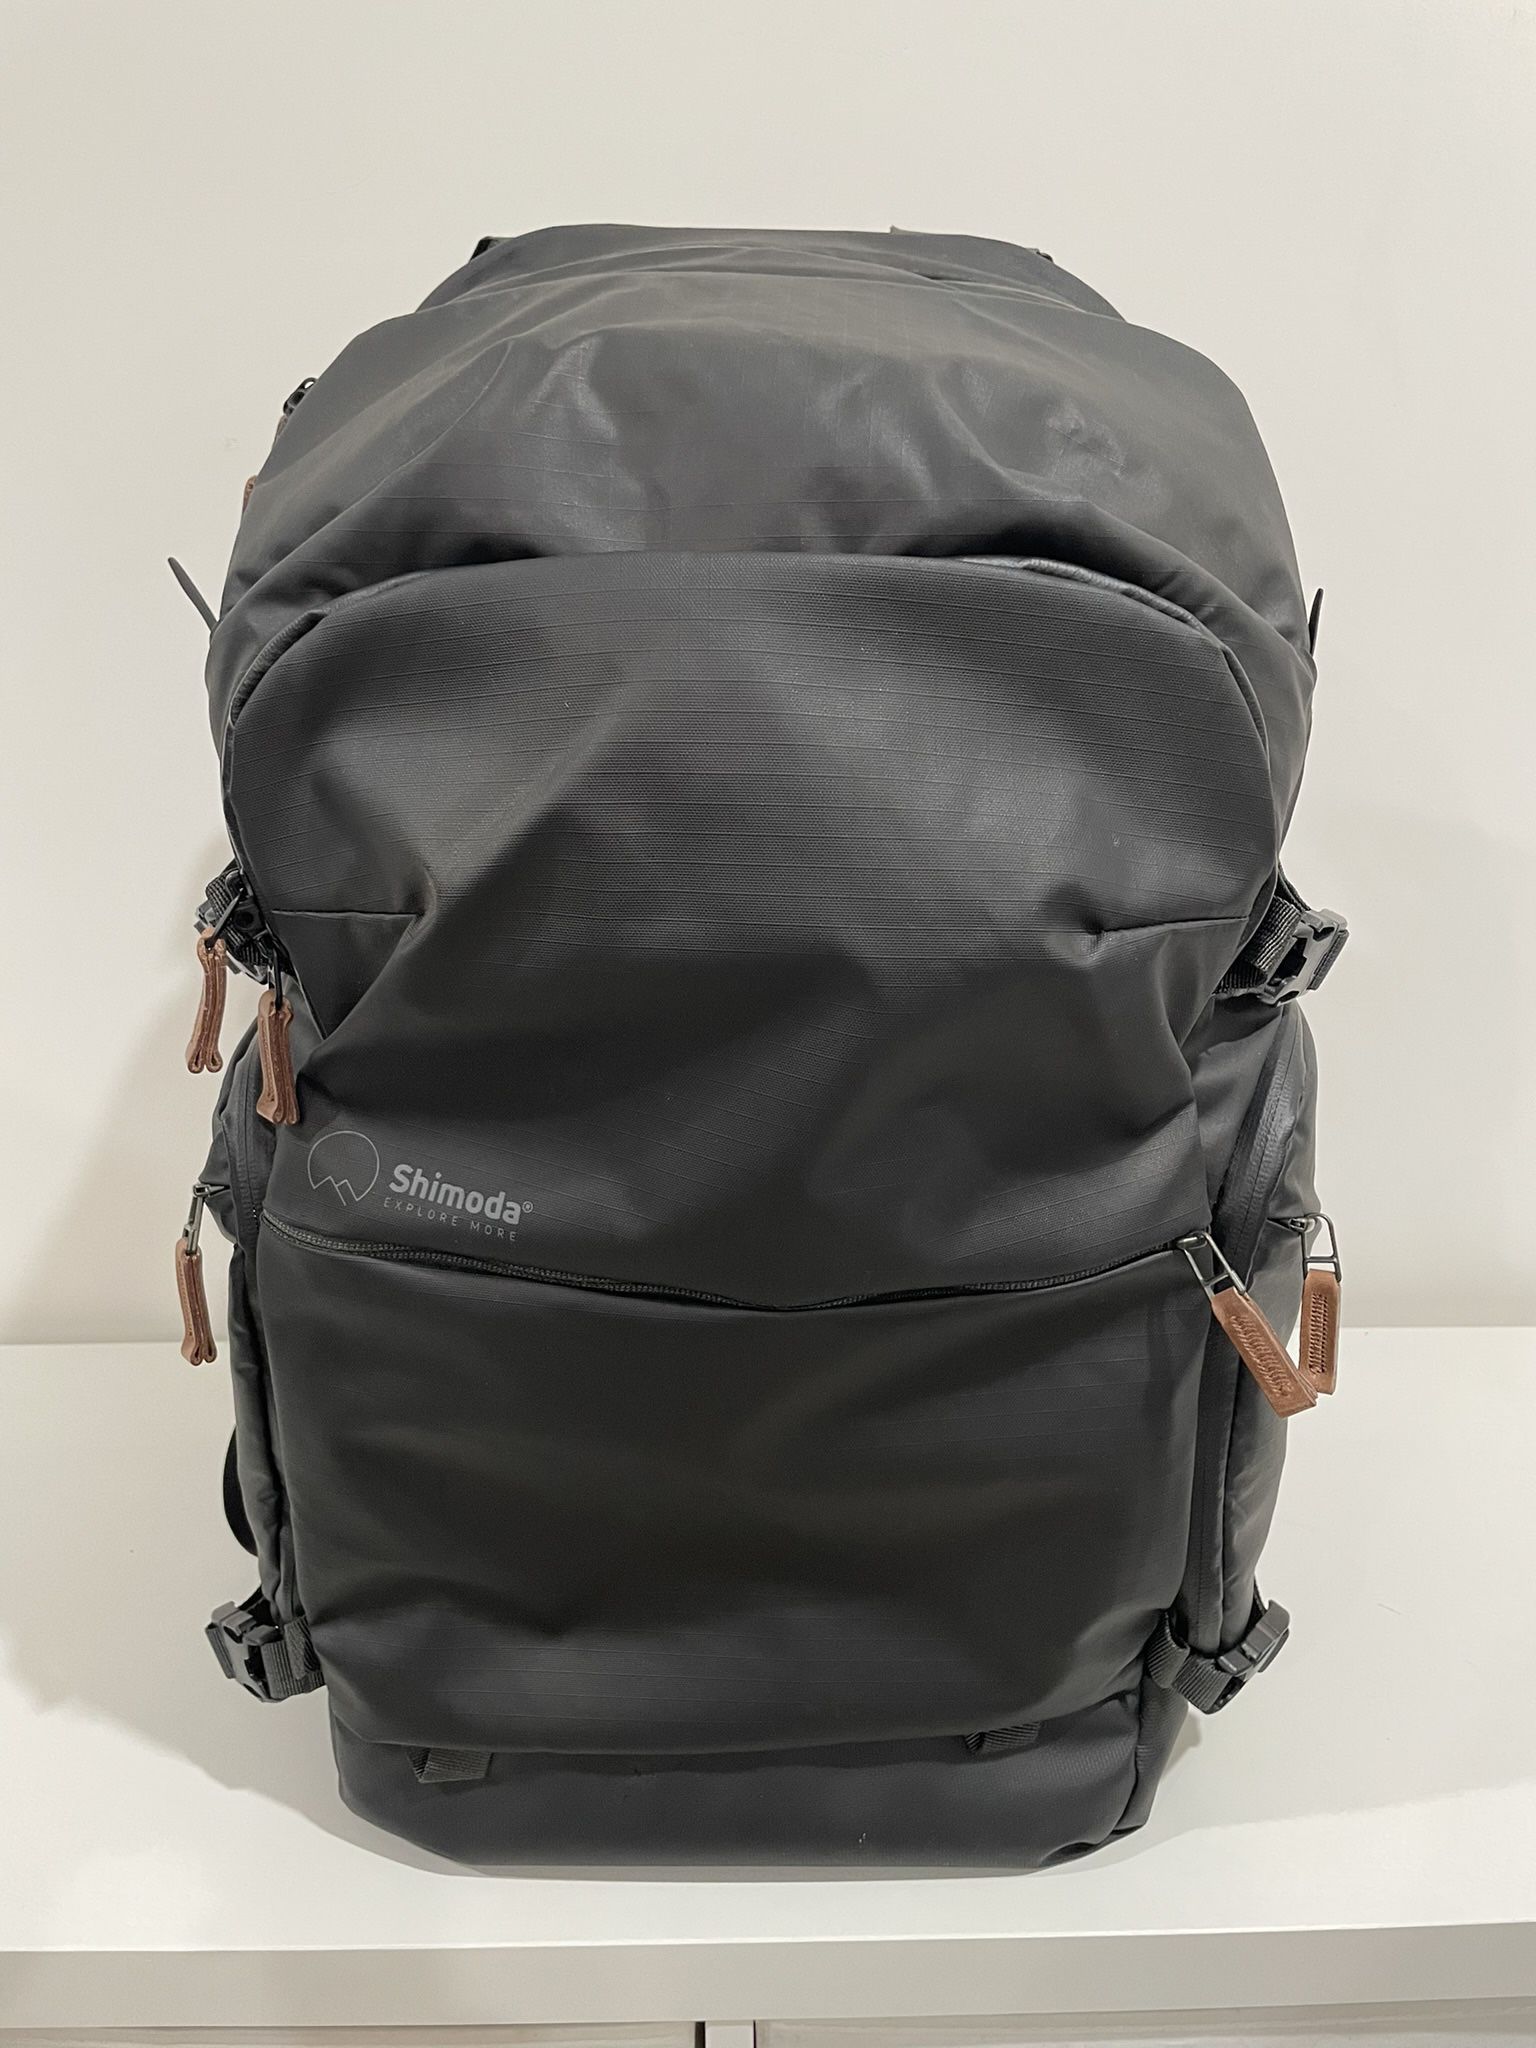 Shimoda Explore V2 30L Camera Backpack